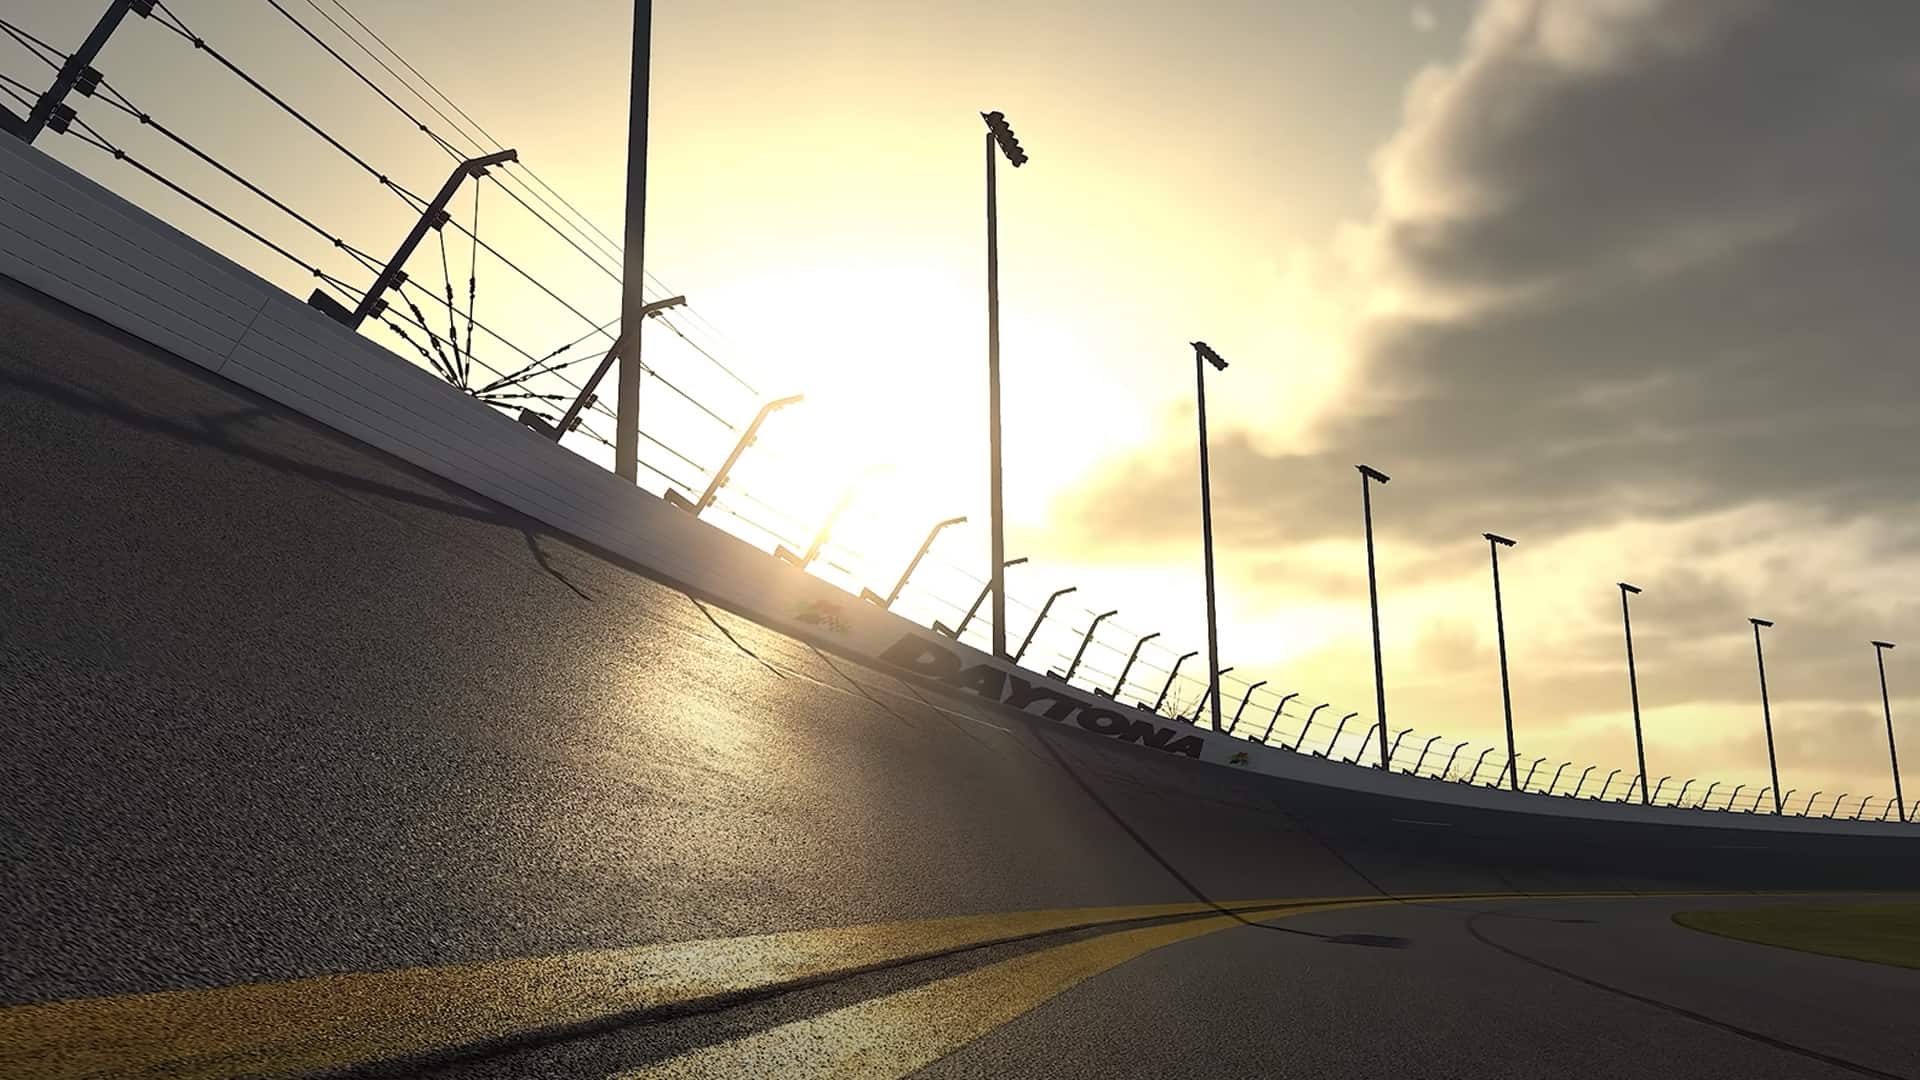 iRacing updates its rendition of Daytona International Speedway